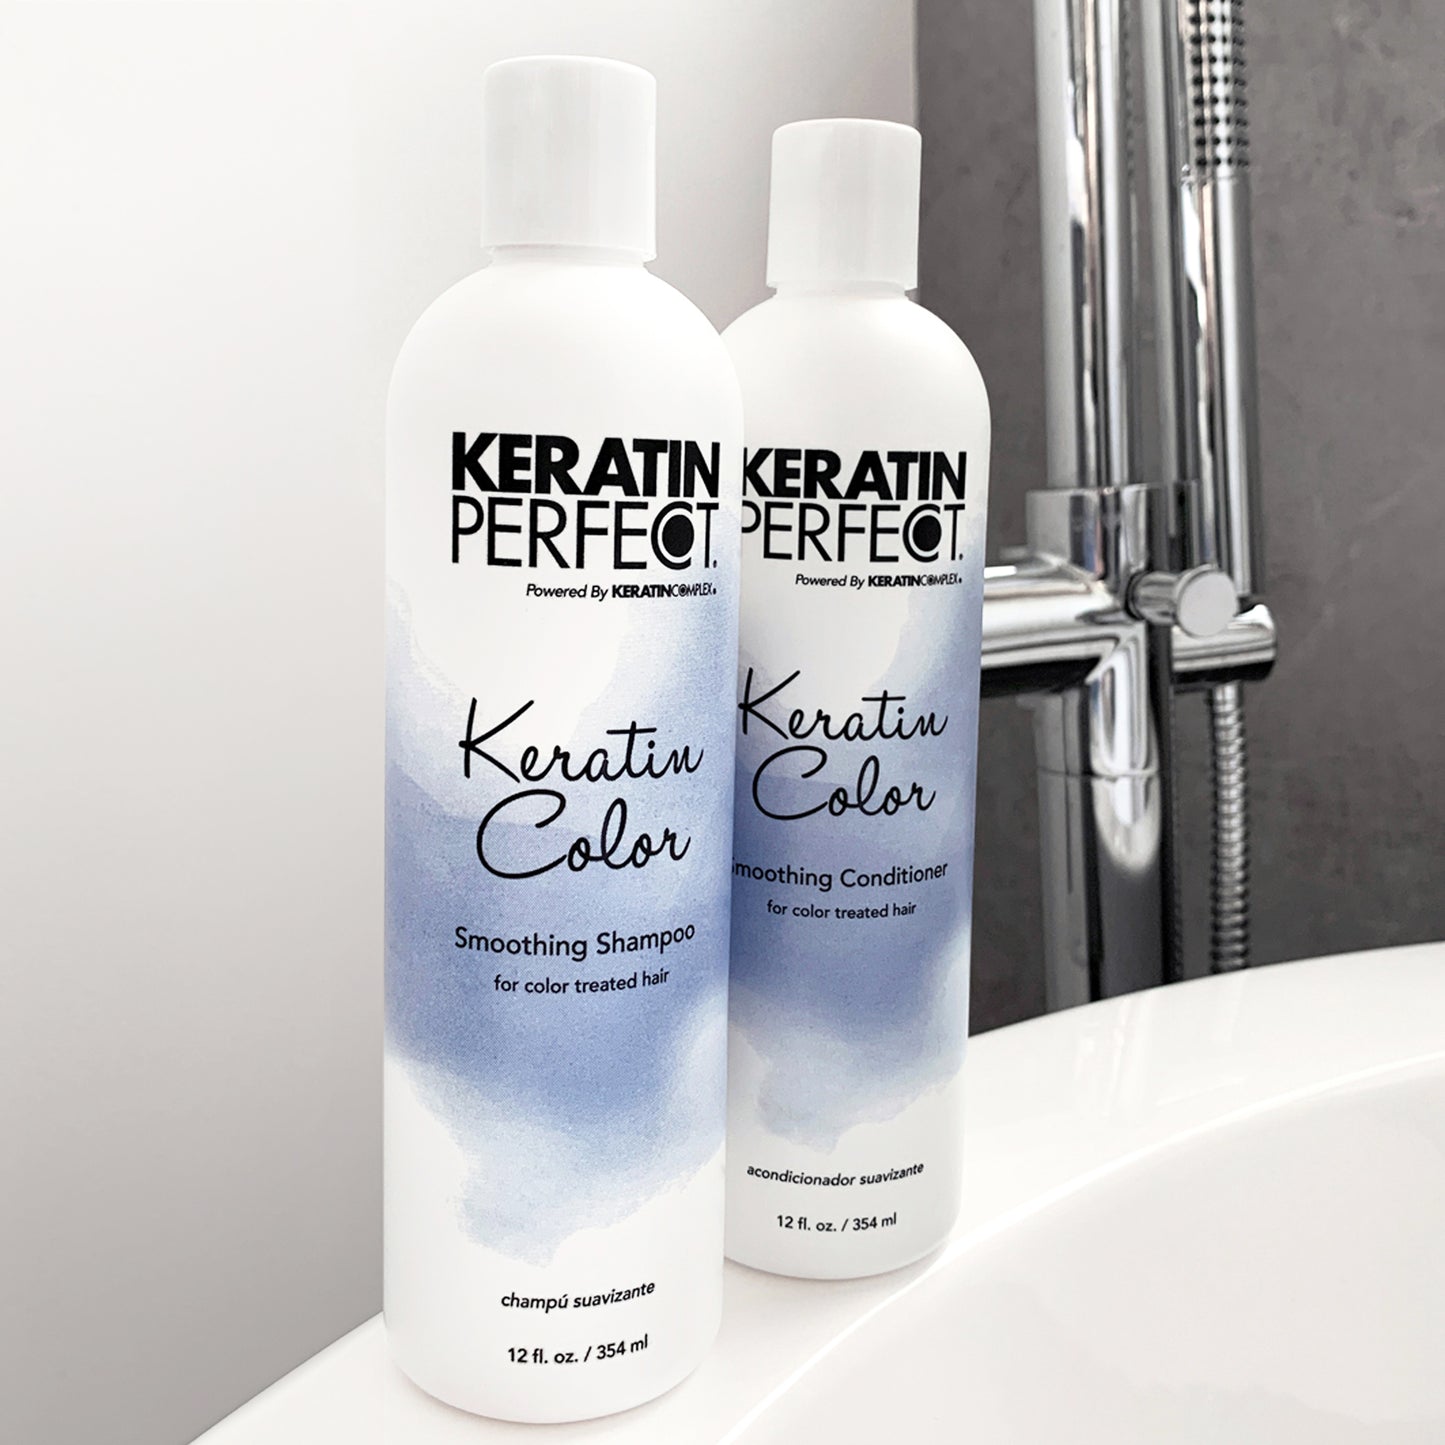 Keratin Color Smoothing Shampoo